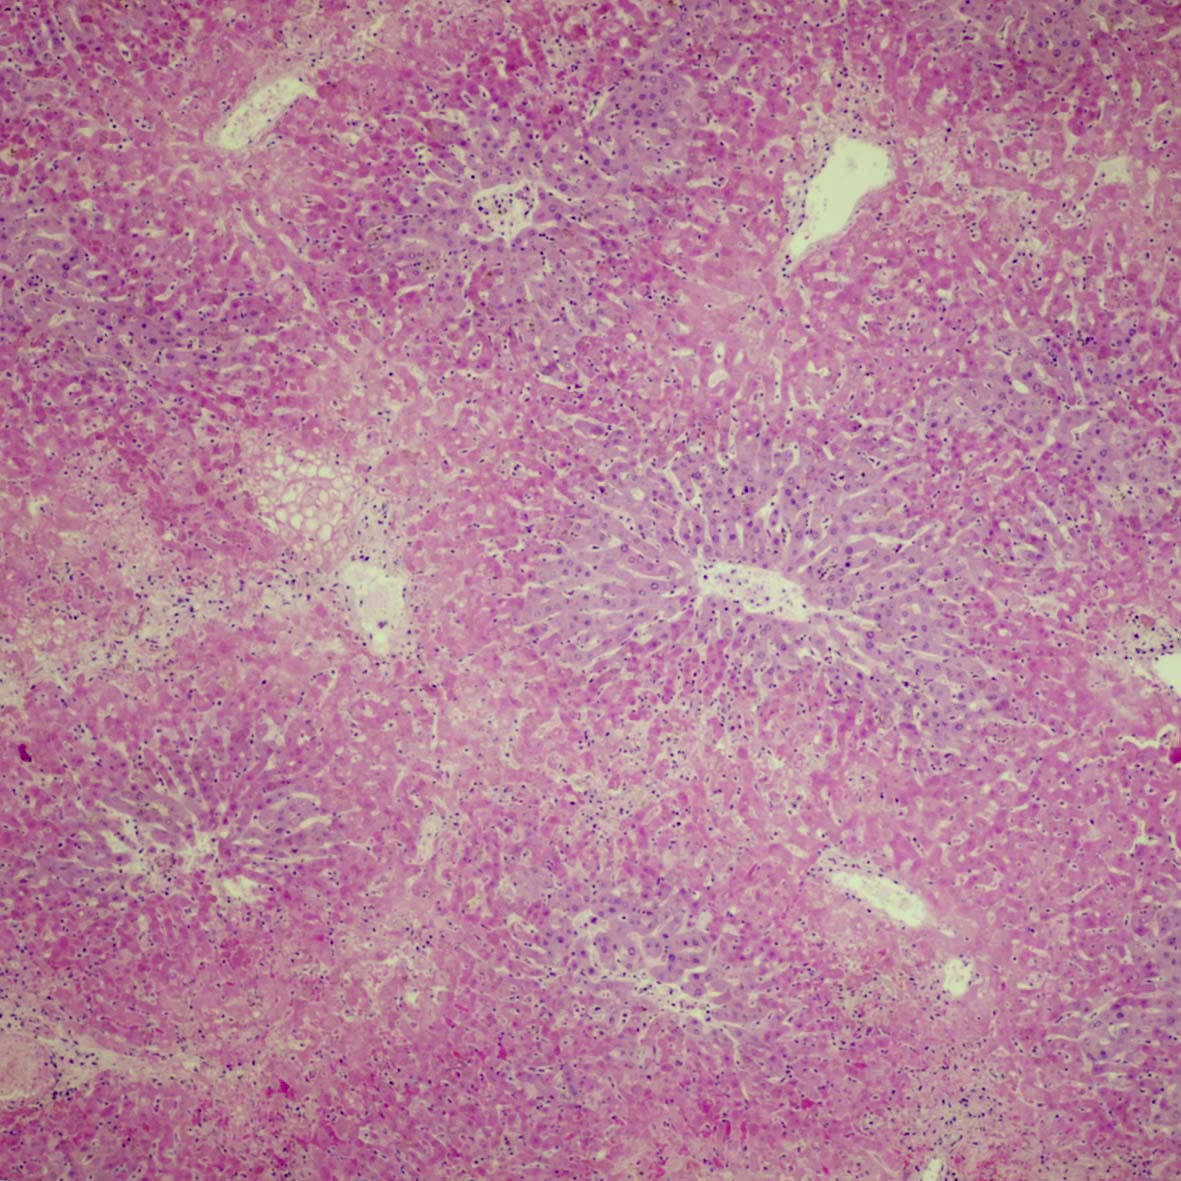 Hepatocellular necrosis due to RHDV2